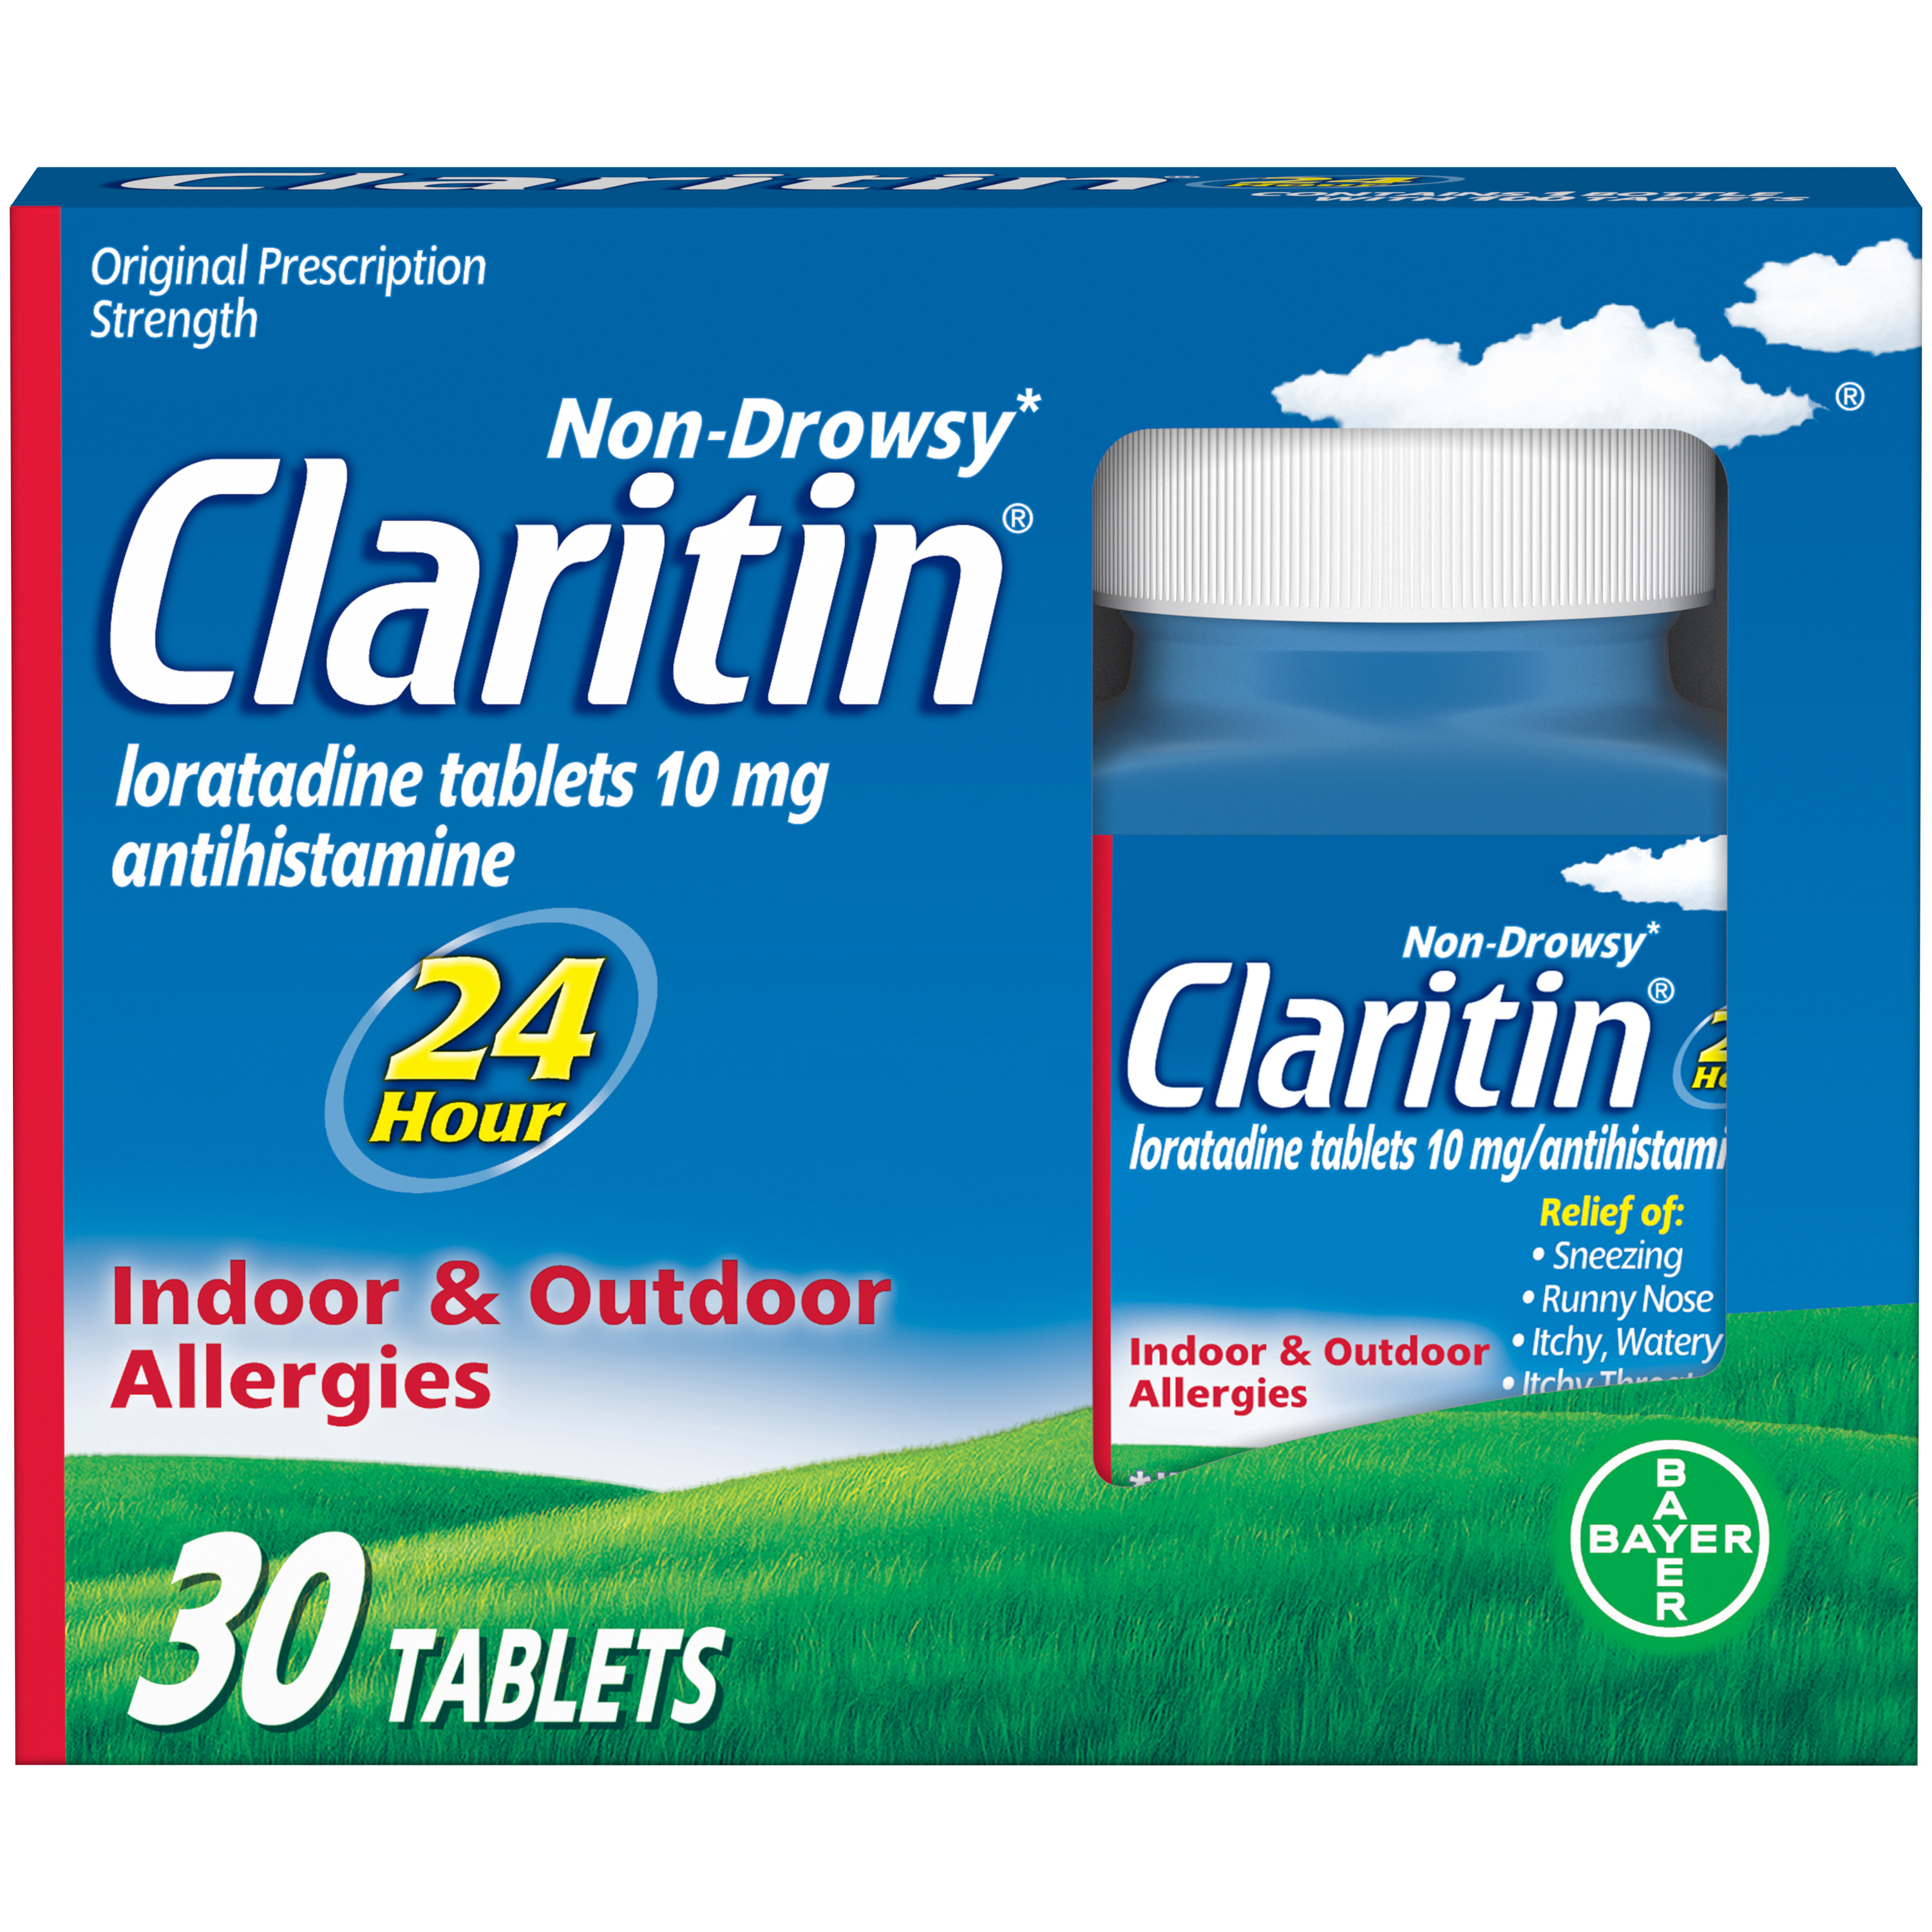 Claritin 24 Hour Non-Drowsy Allergy Medicine, Loratadine Antihistamine Tablets, 30 Ct - image 1 of 10